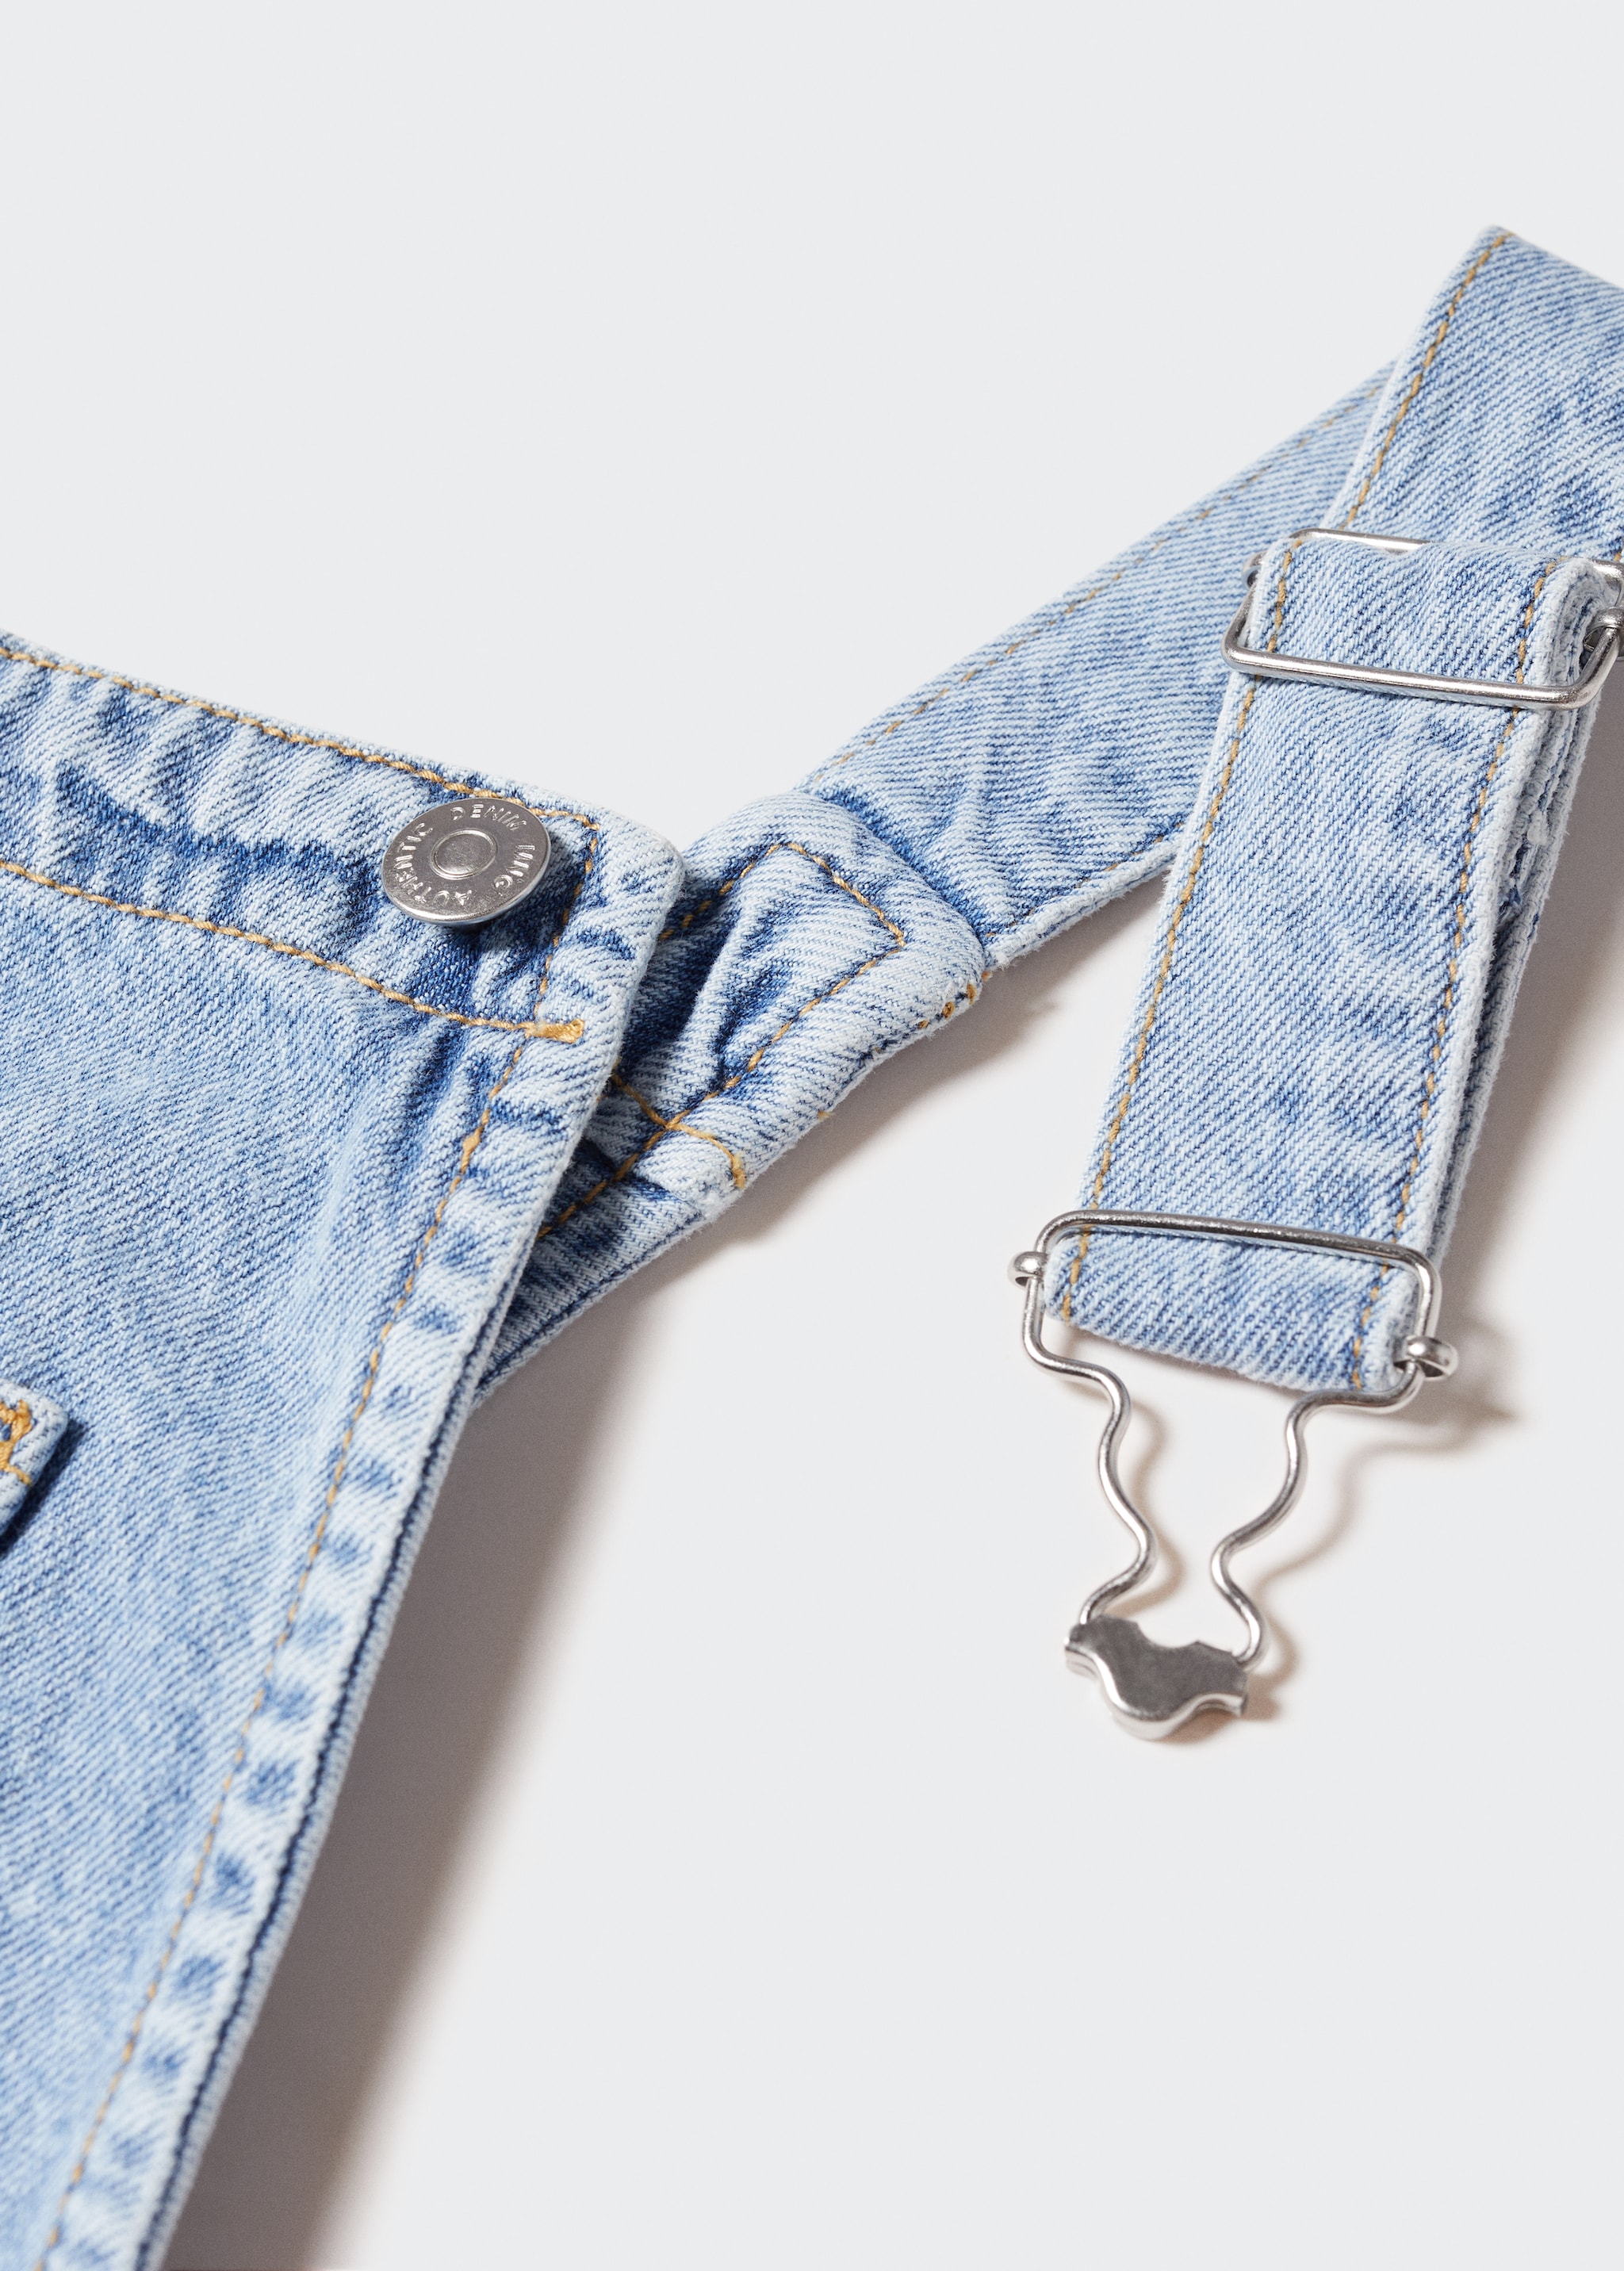 Jeans-Latzhose im Culotte-Stil - Detail des Artikels 8